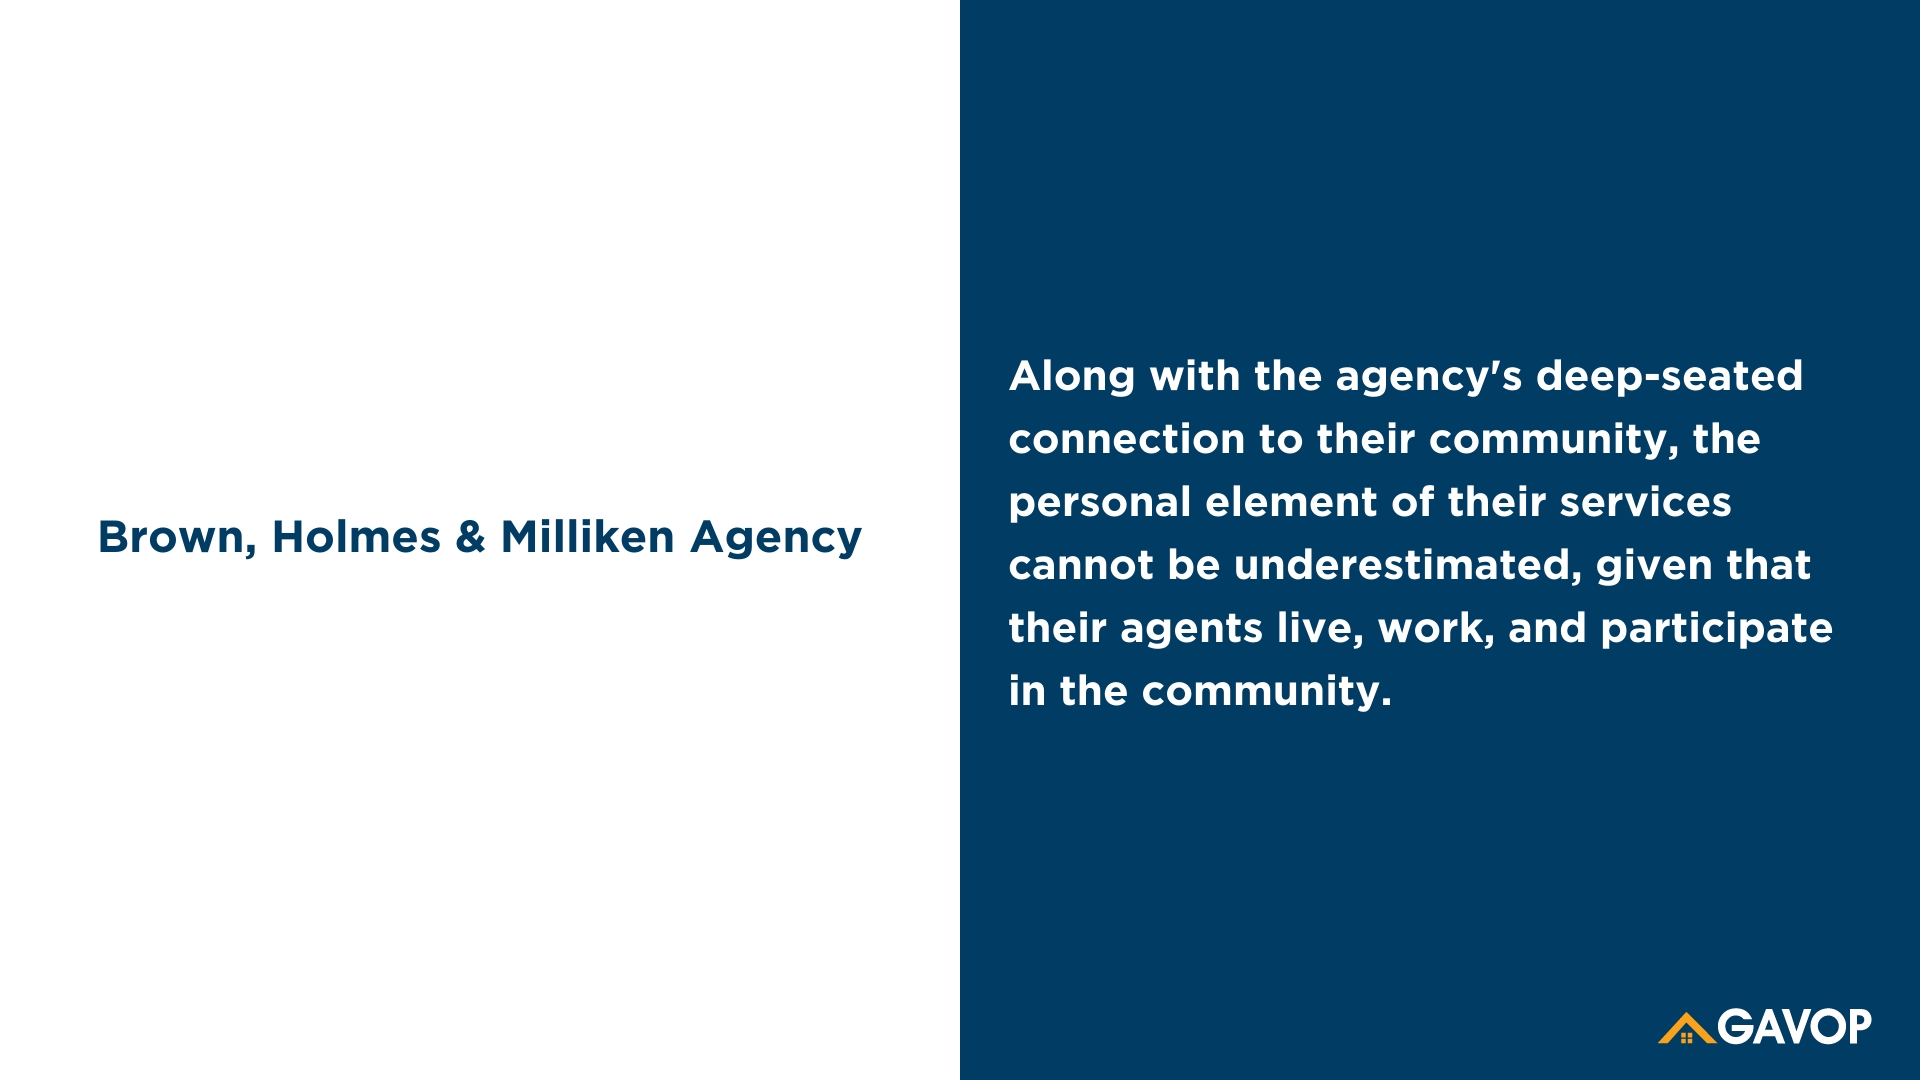 Brown, Holmes & Milliken Agency